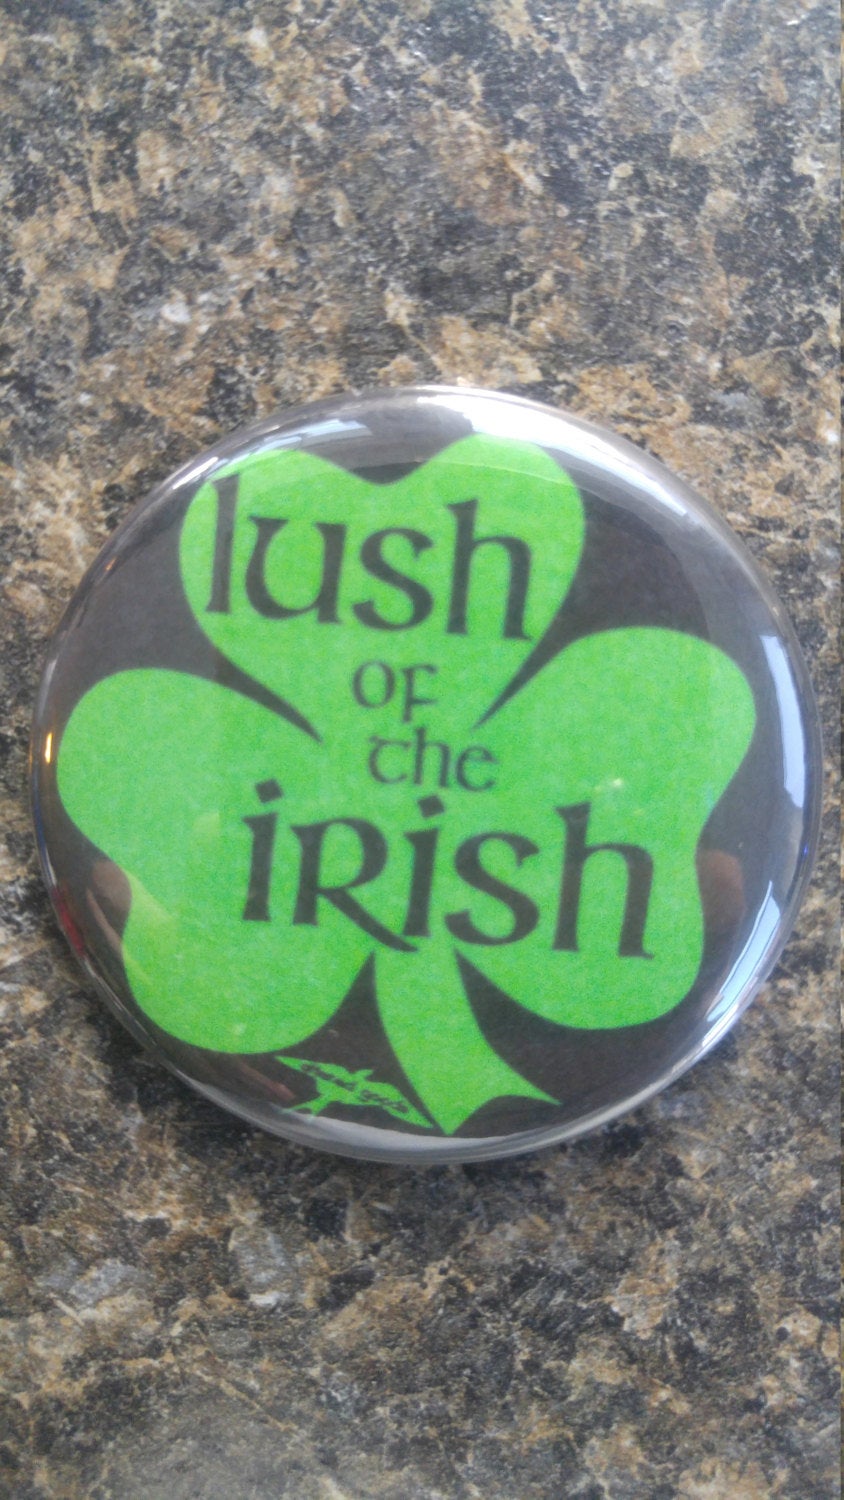 Lush of the irish pinback button - Altered Goods